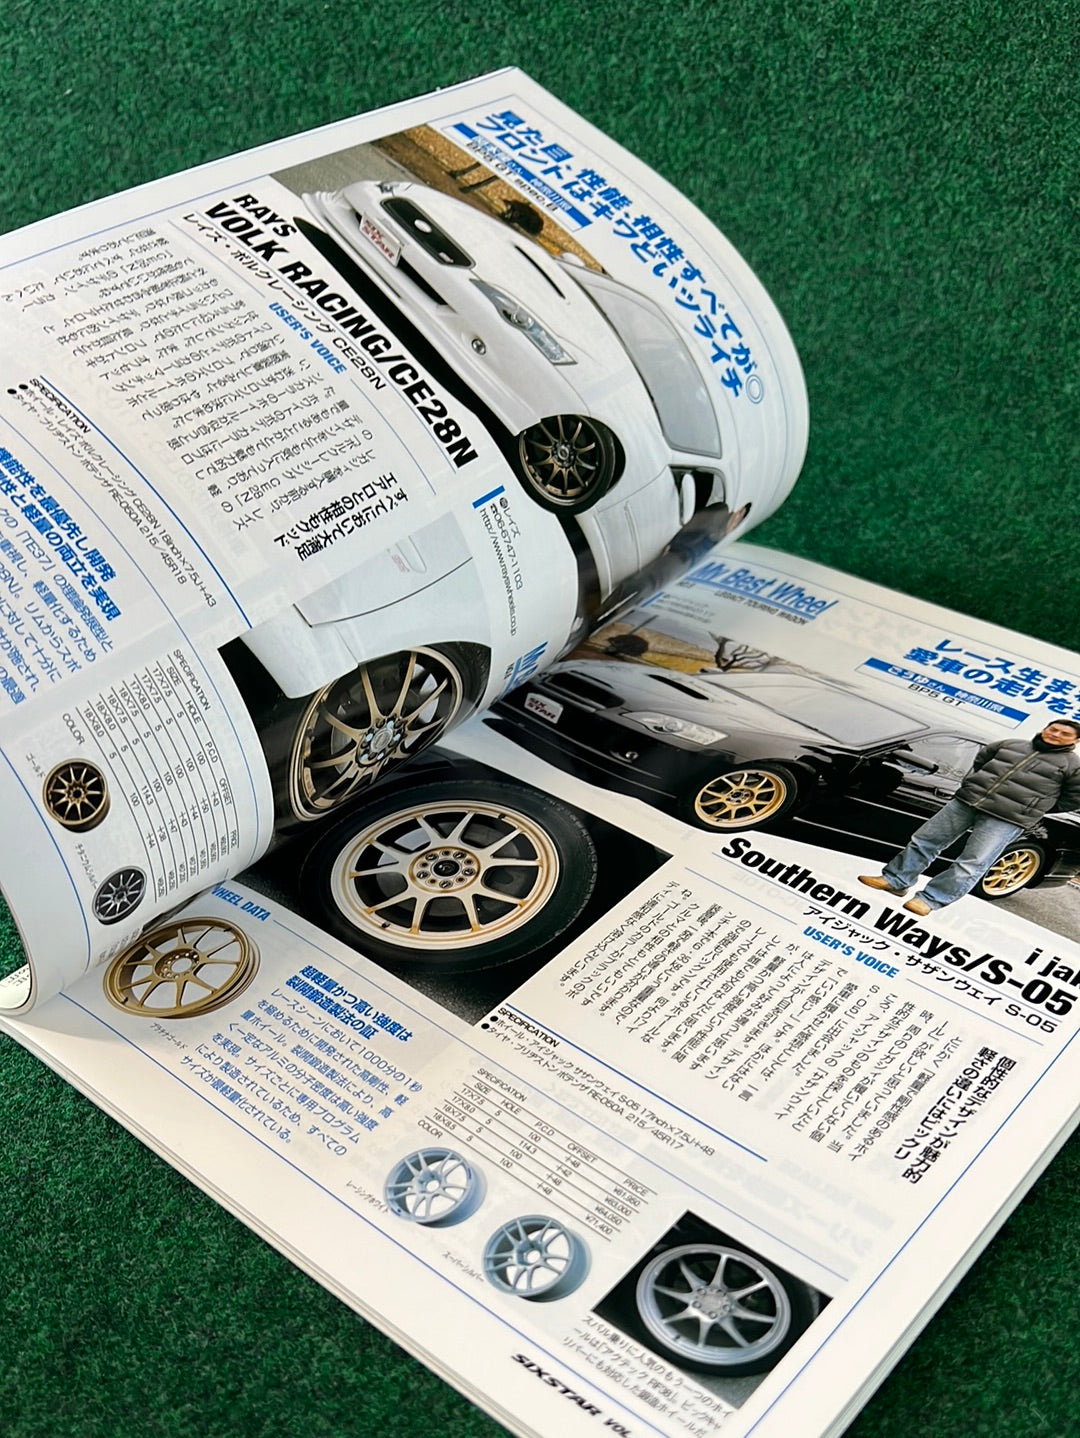 Six Star Subaru Magazine Set - 2005 Vol. 14 & 2006 Vol.  15